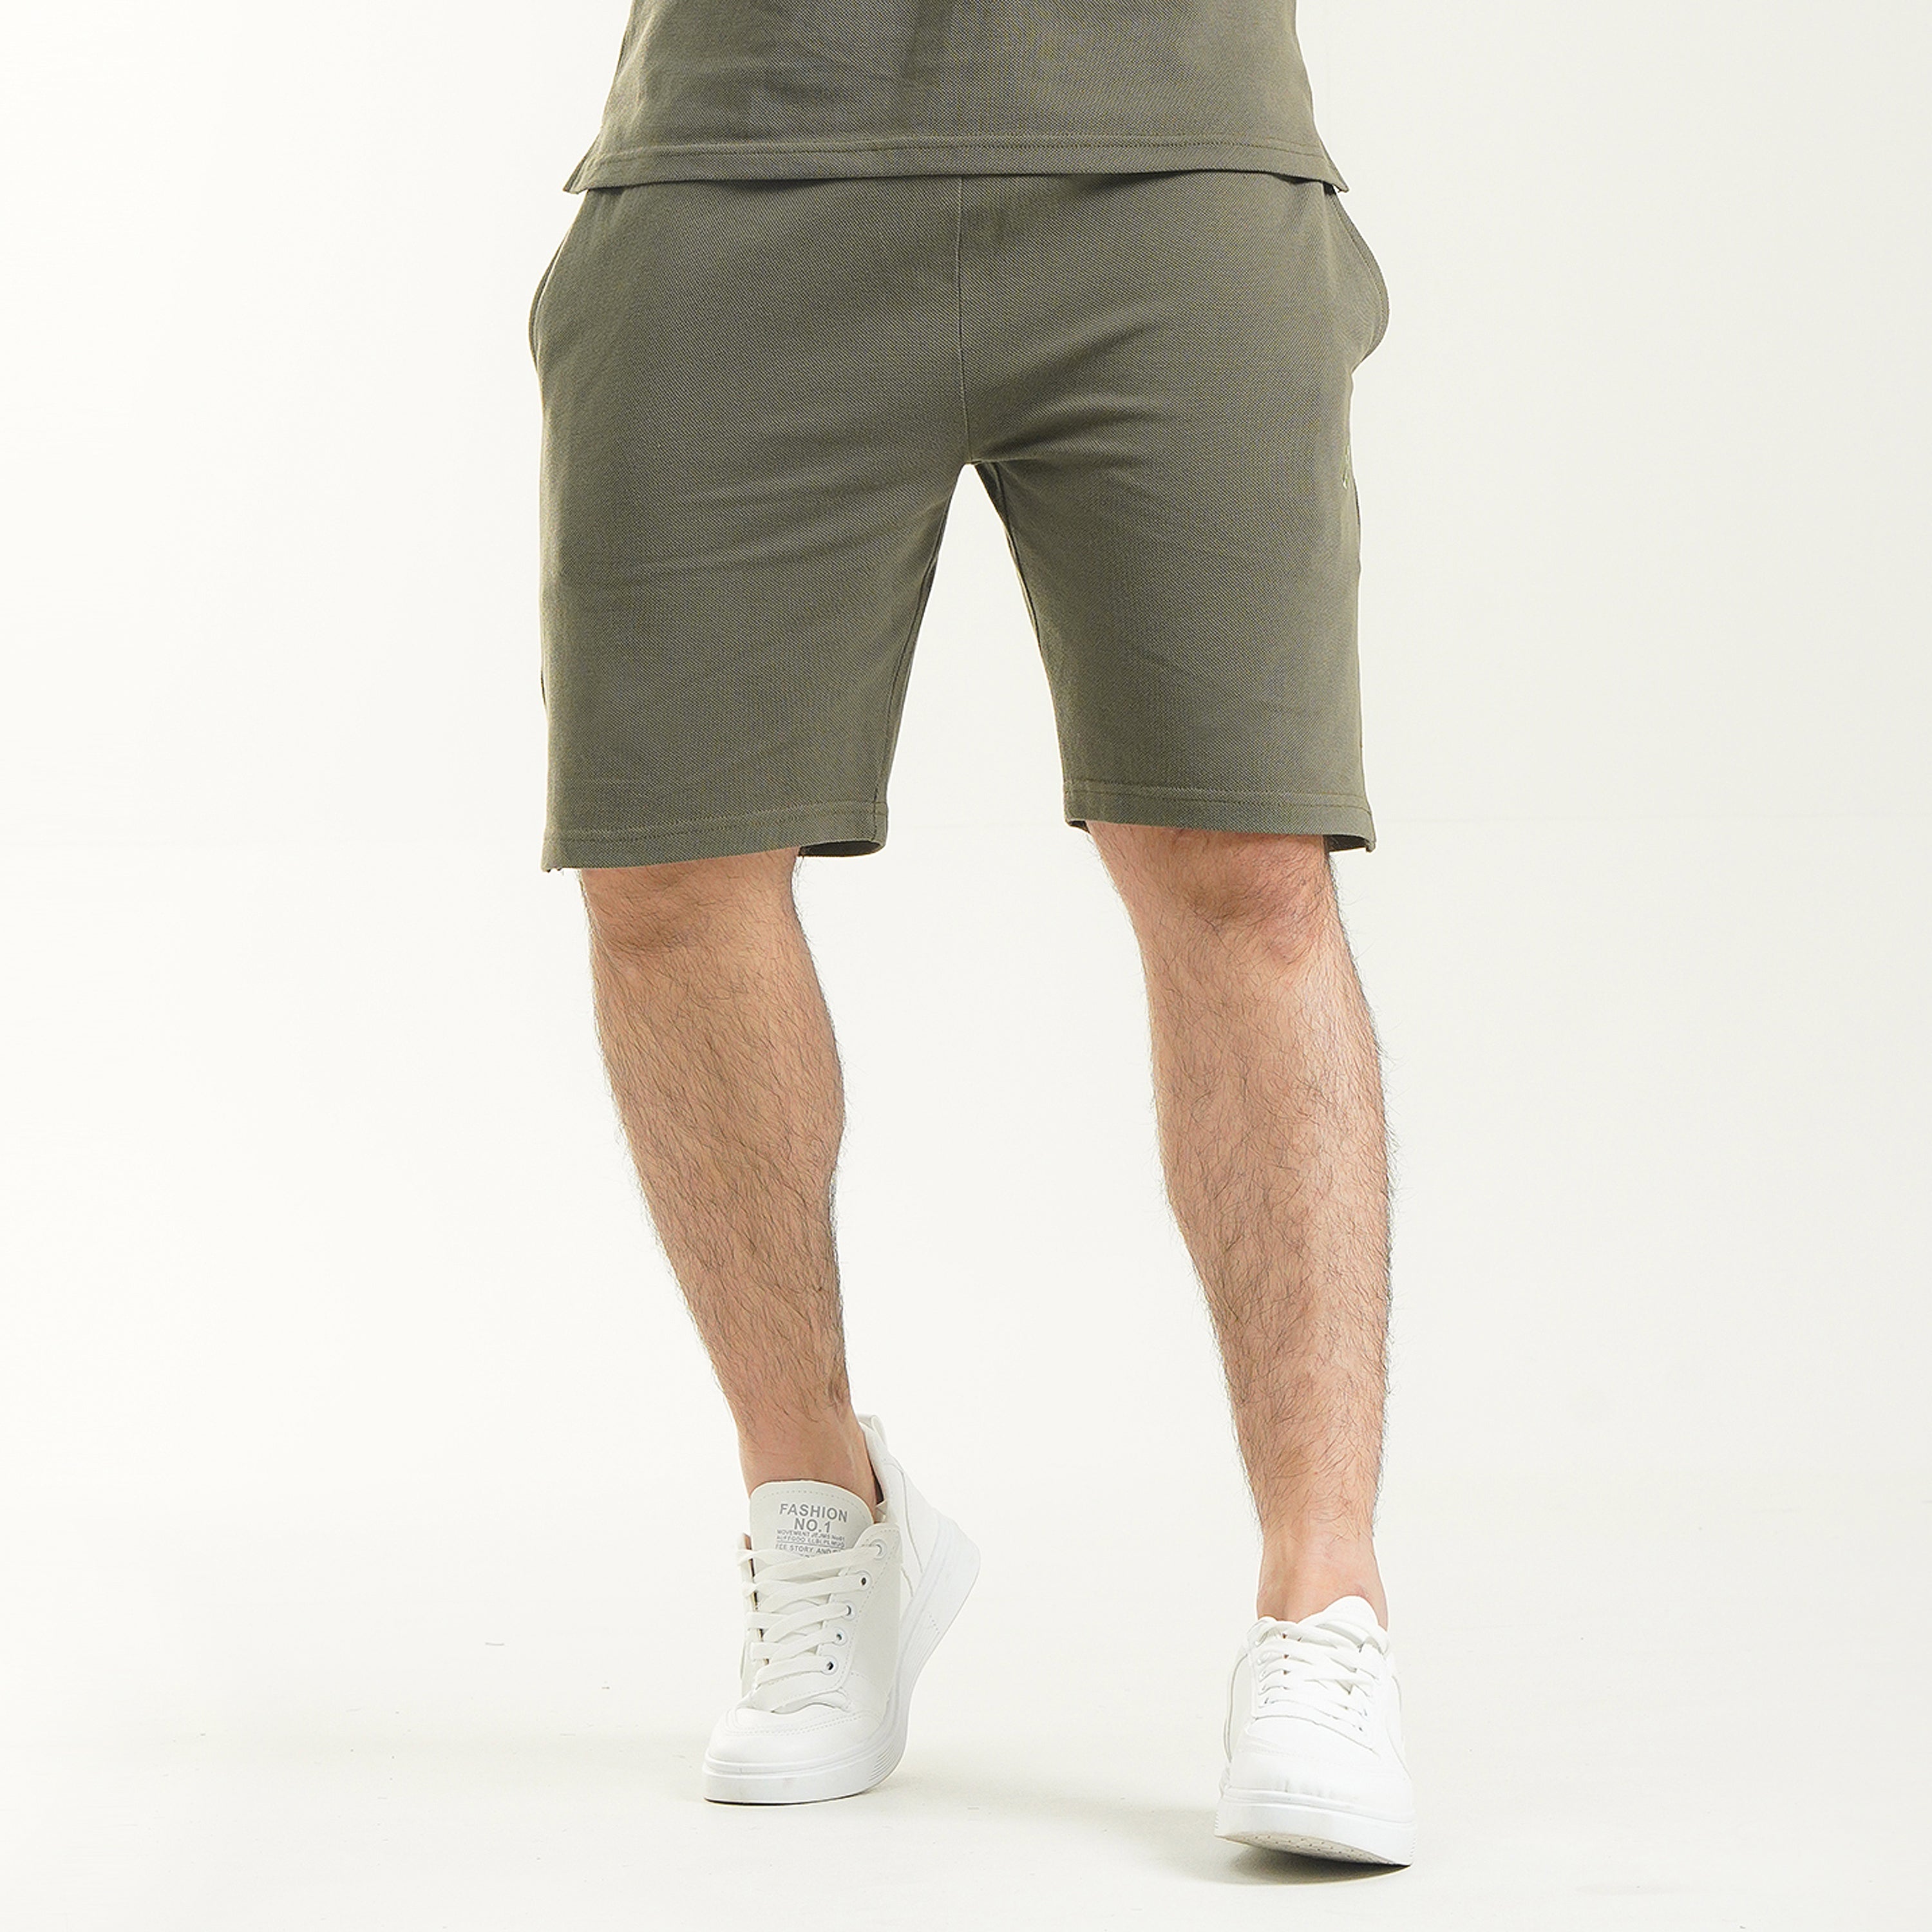 Fibr - Everyday OliveGreen Shorts